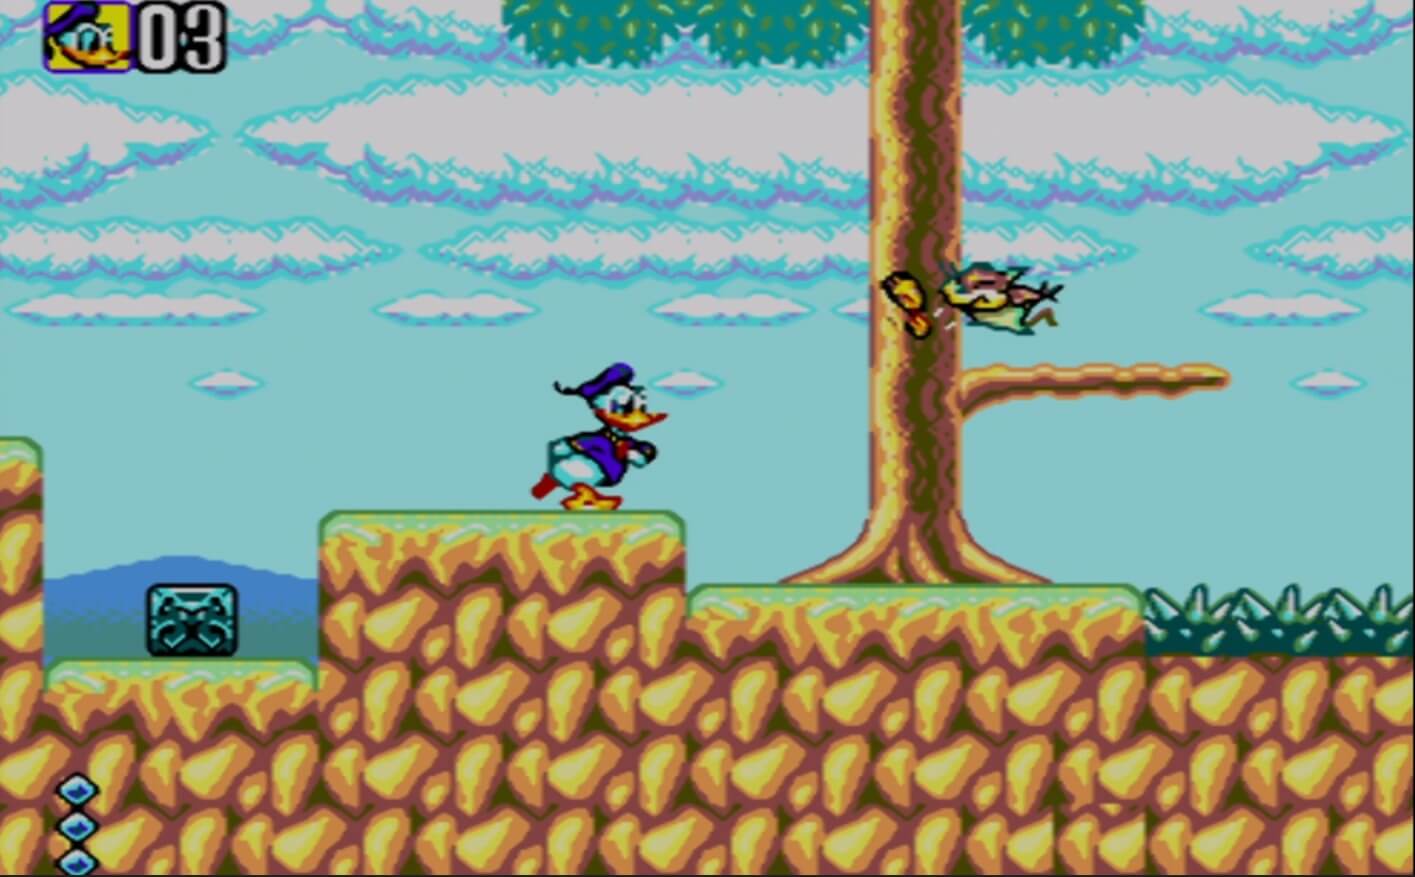 Deep Duck Trouble Starring Donald Duck - геймплей игры Sega Master System\Sega Mark III